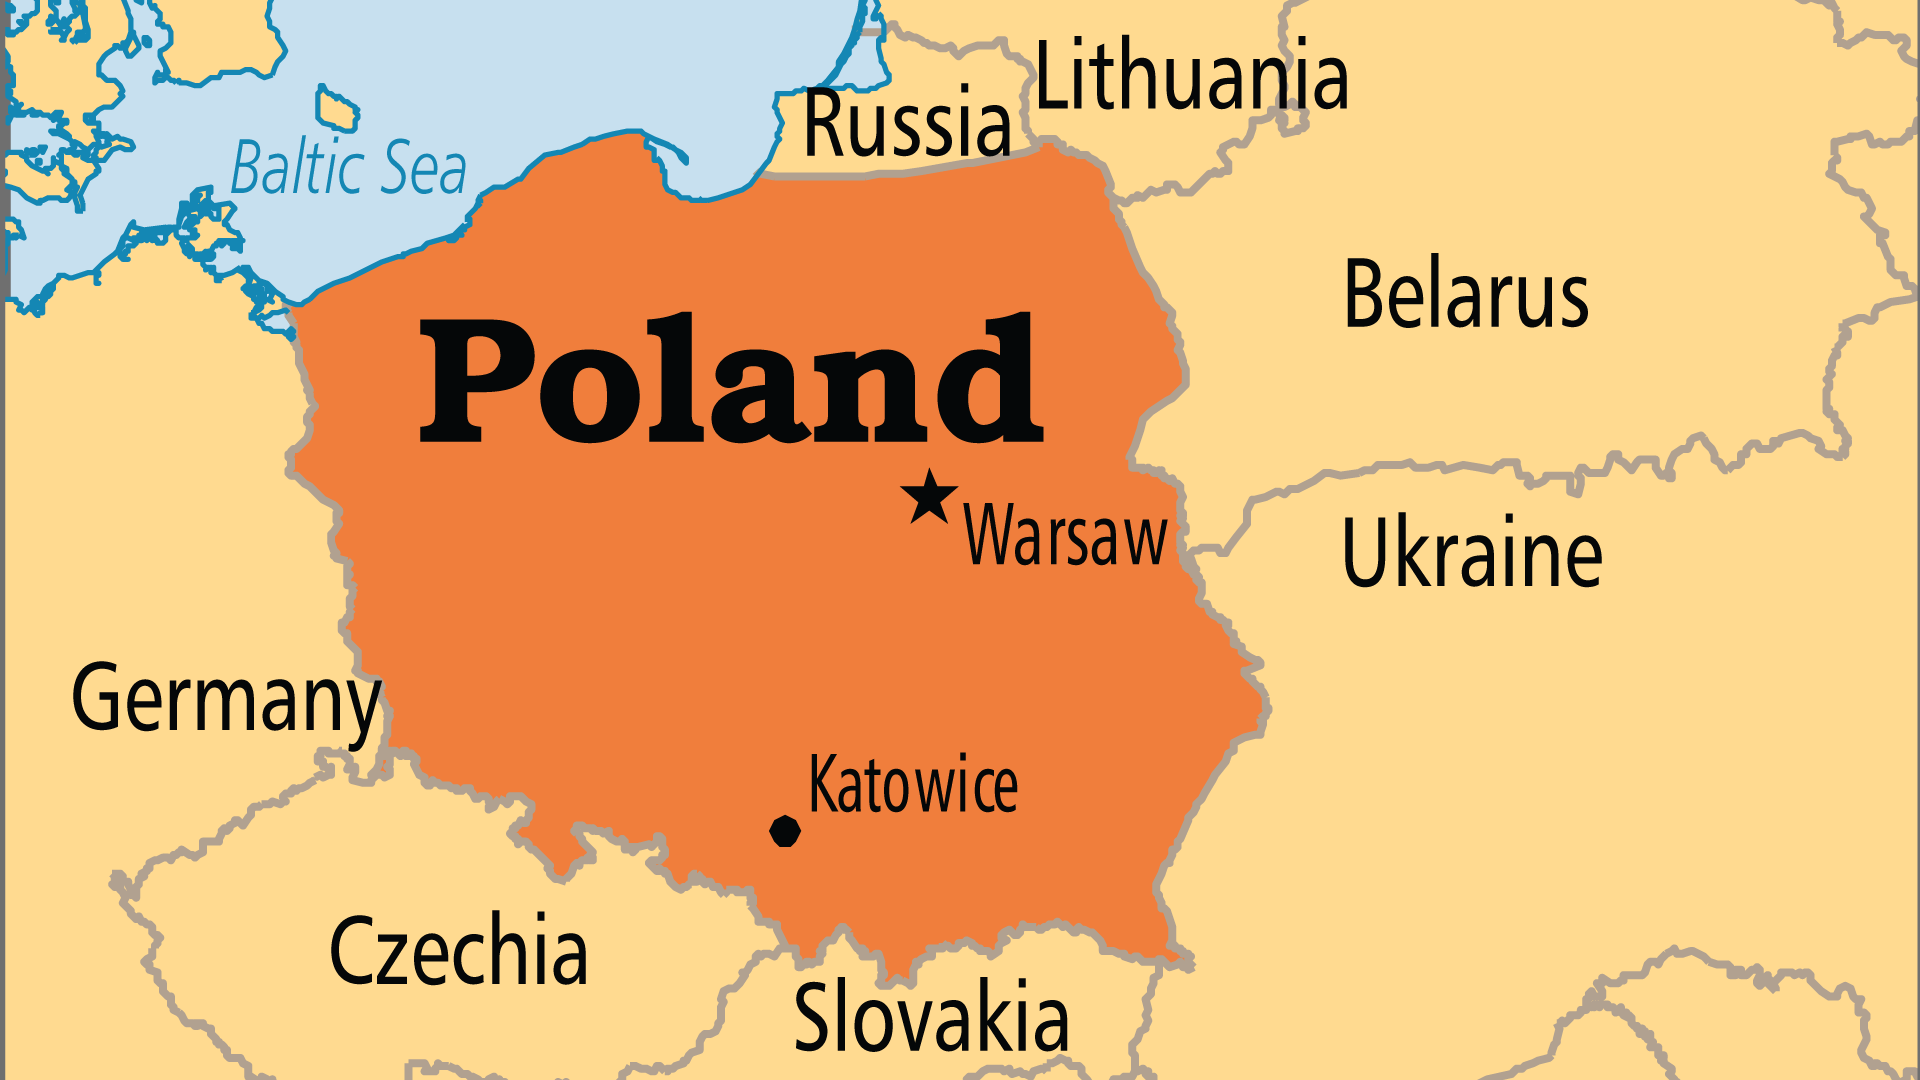 Poland (Operation World)